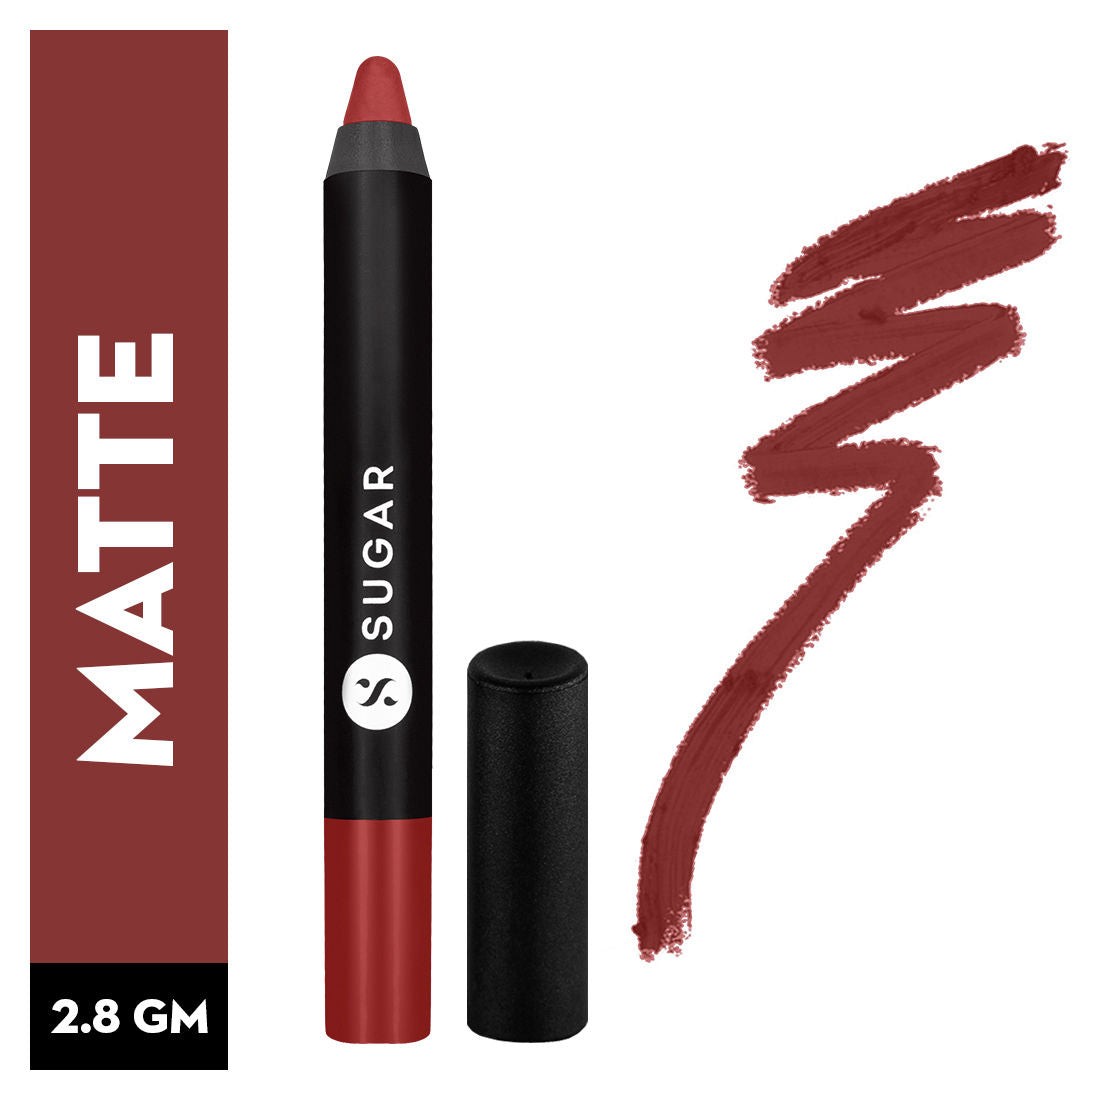 Sugar Matte As Hell Crayon Lipstick With Free Sharpener - 08 Jackie Brown (Reddish Brown) (2.8G)